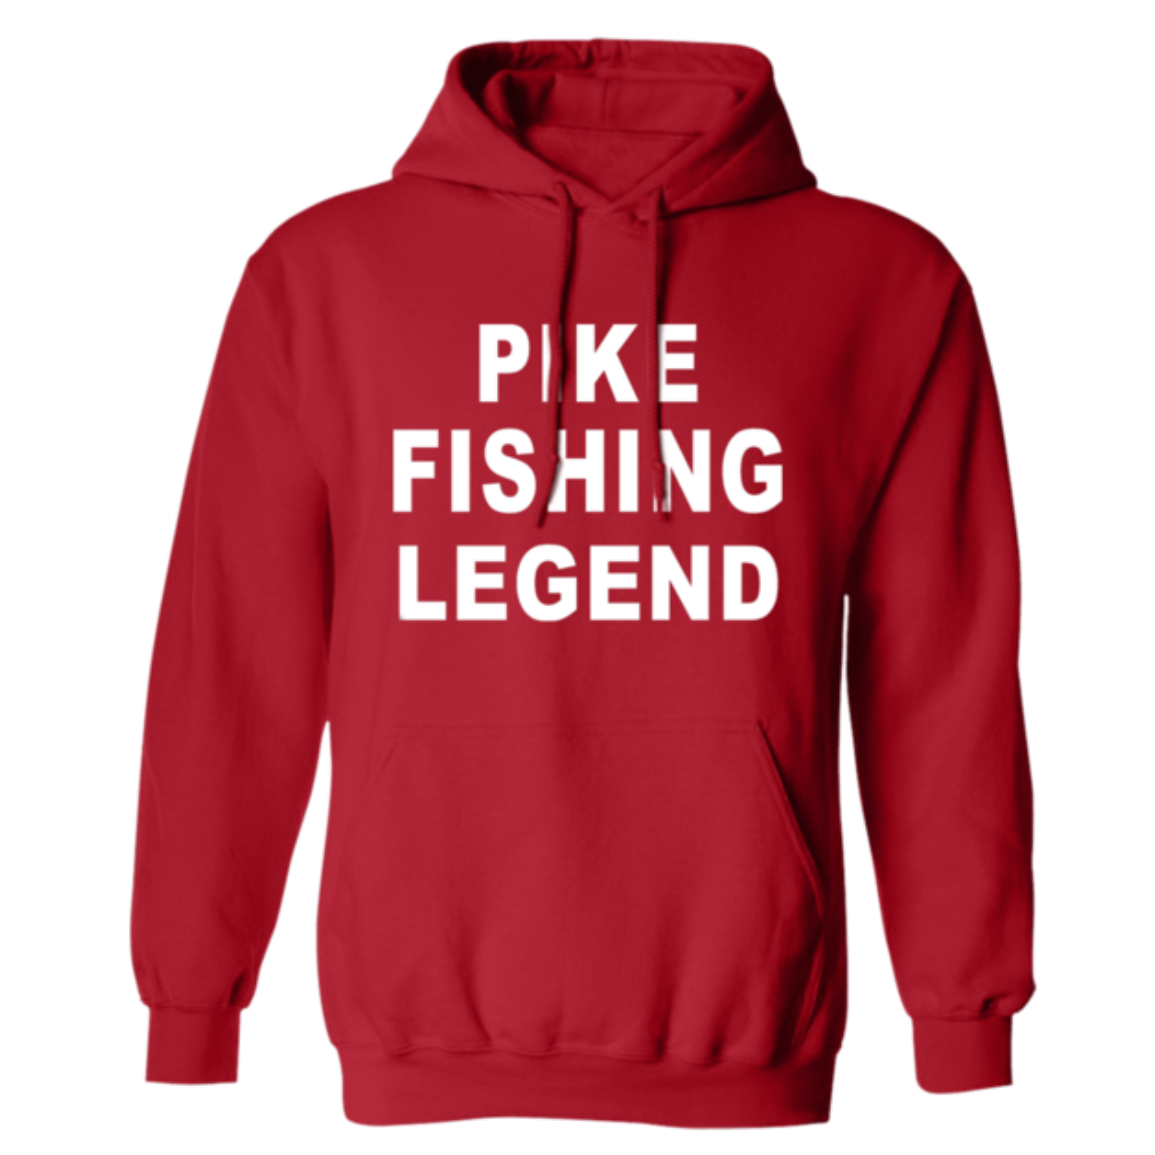 Pike fishing legend hoodie w red